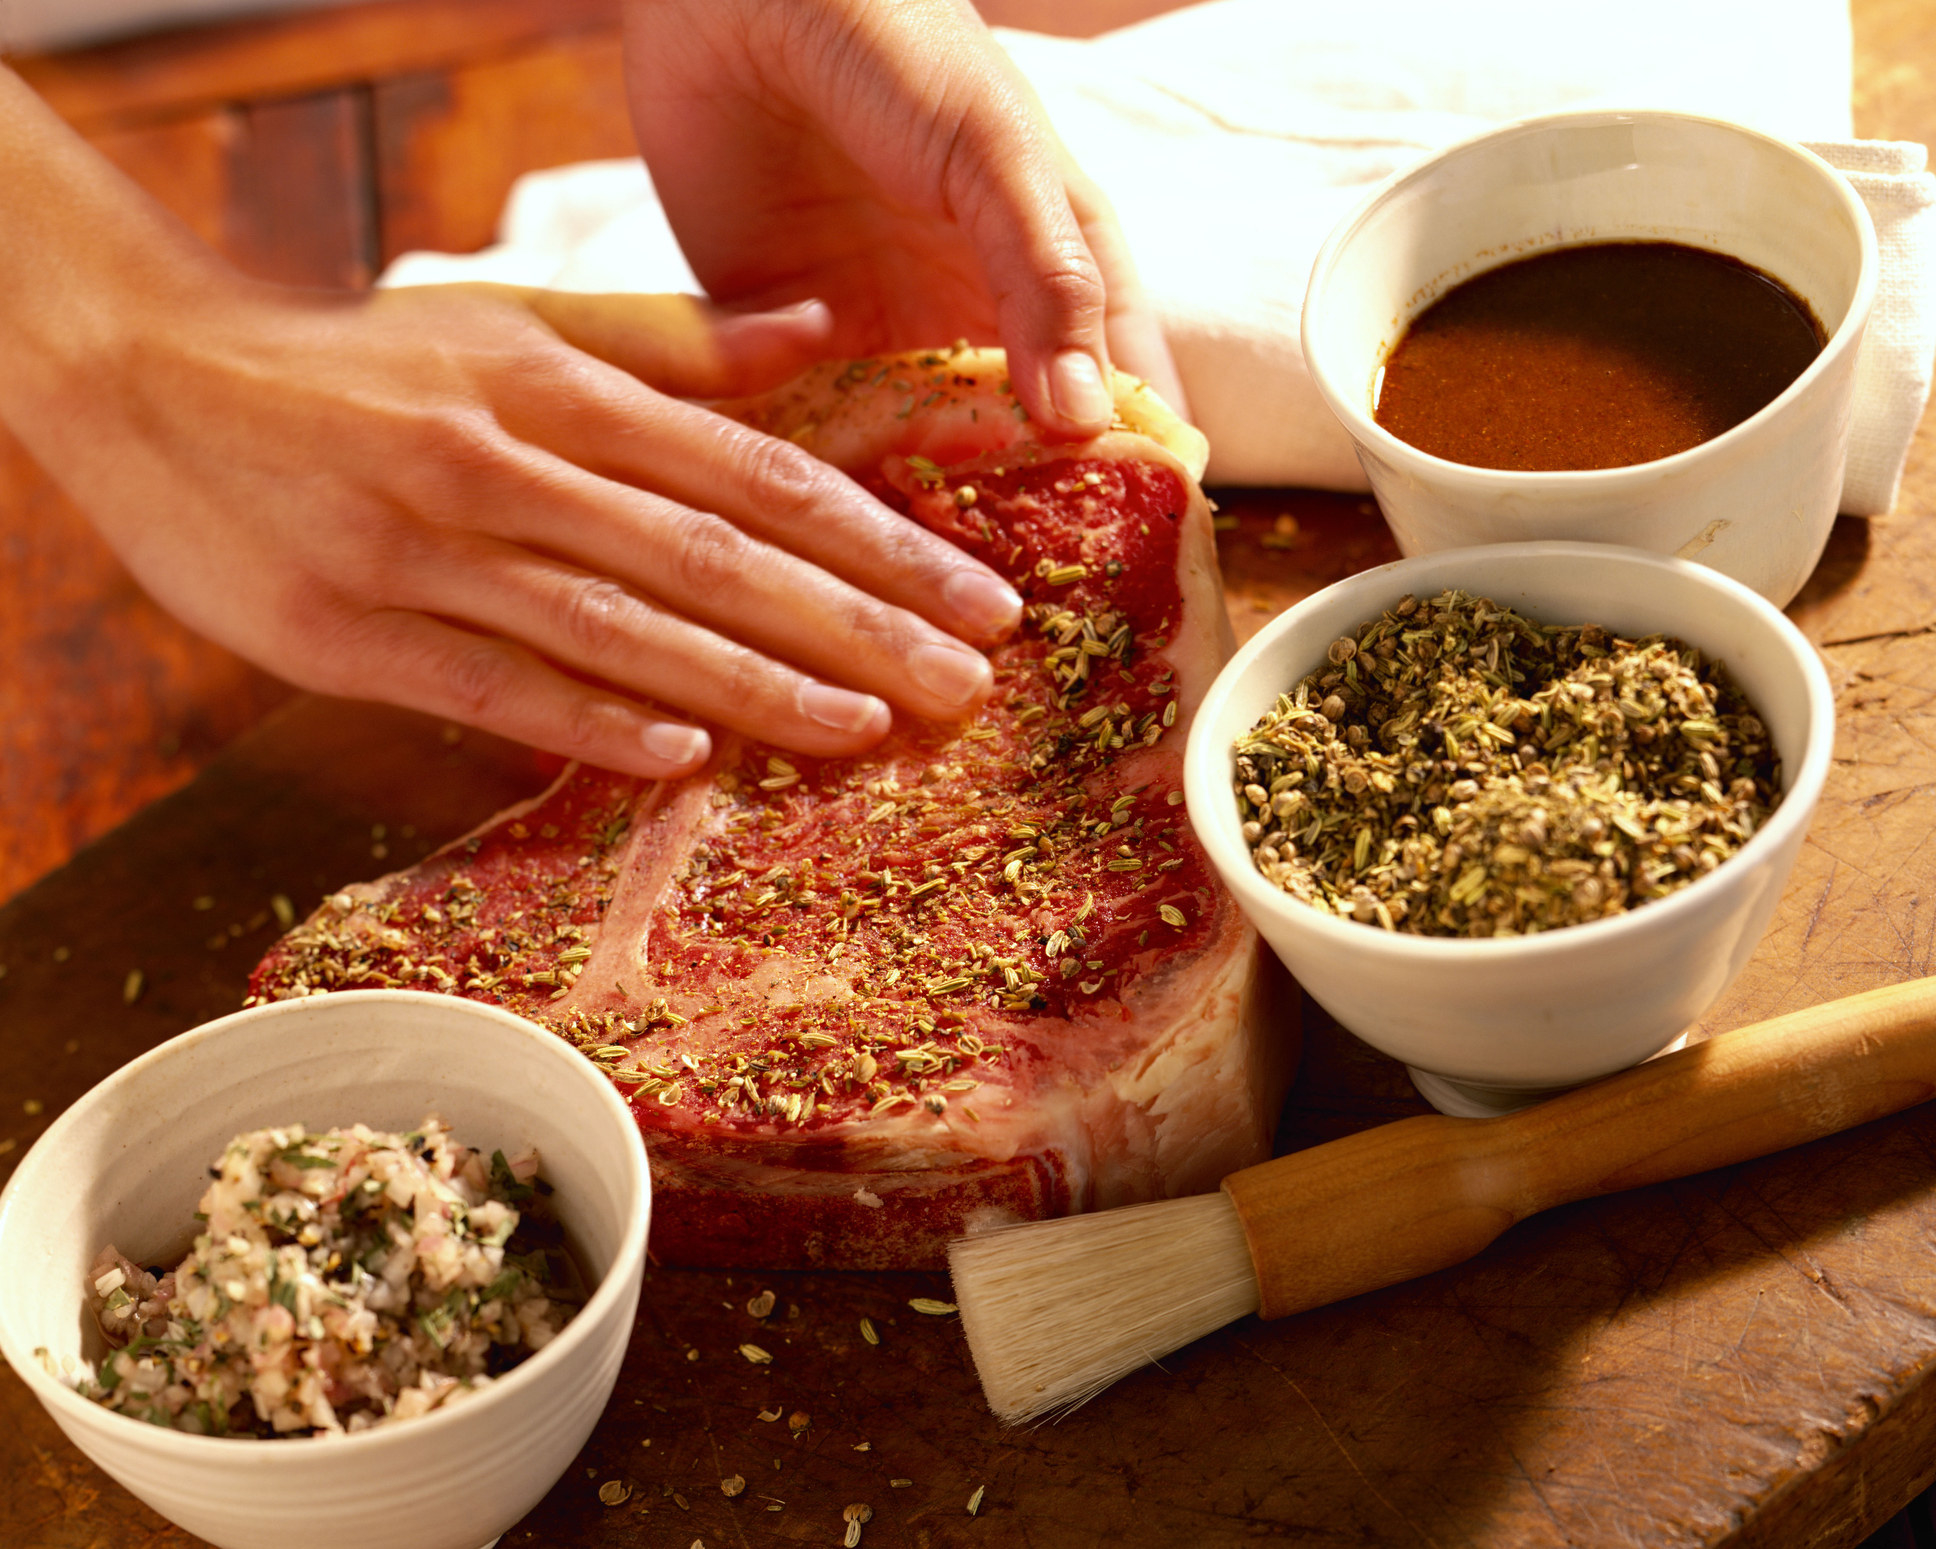 Hands seasoning a steak with herbs. 